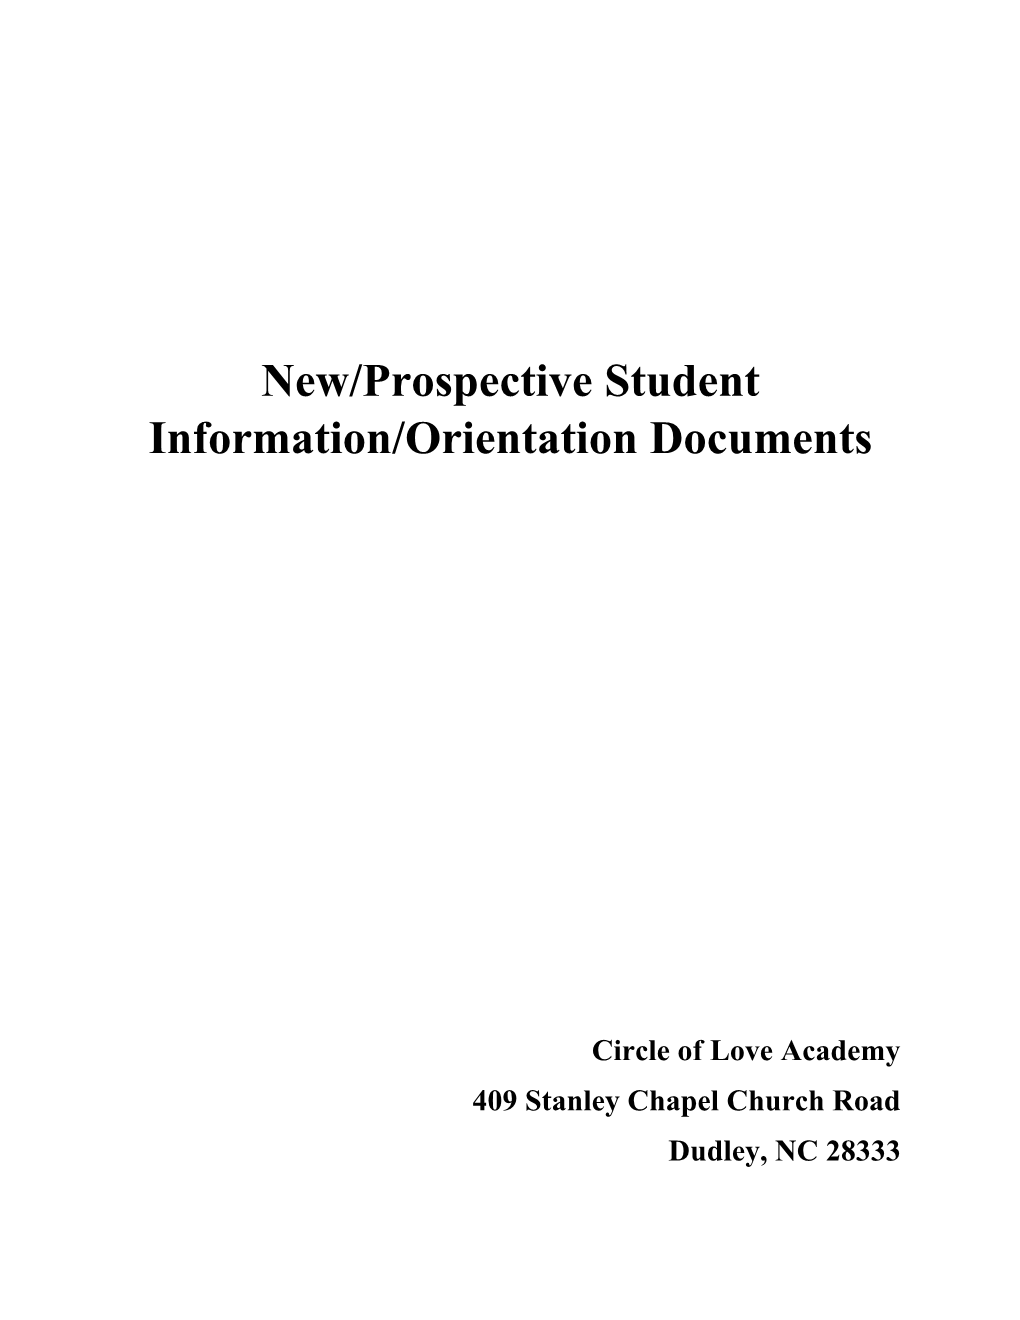 New/Prospective Student Information/Orientation Documents